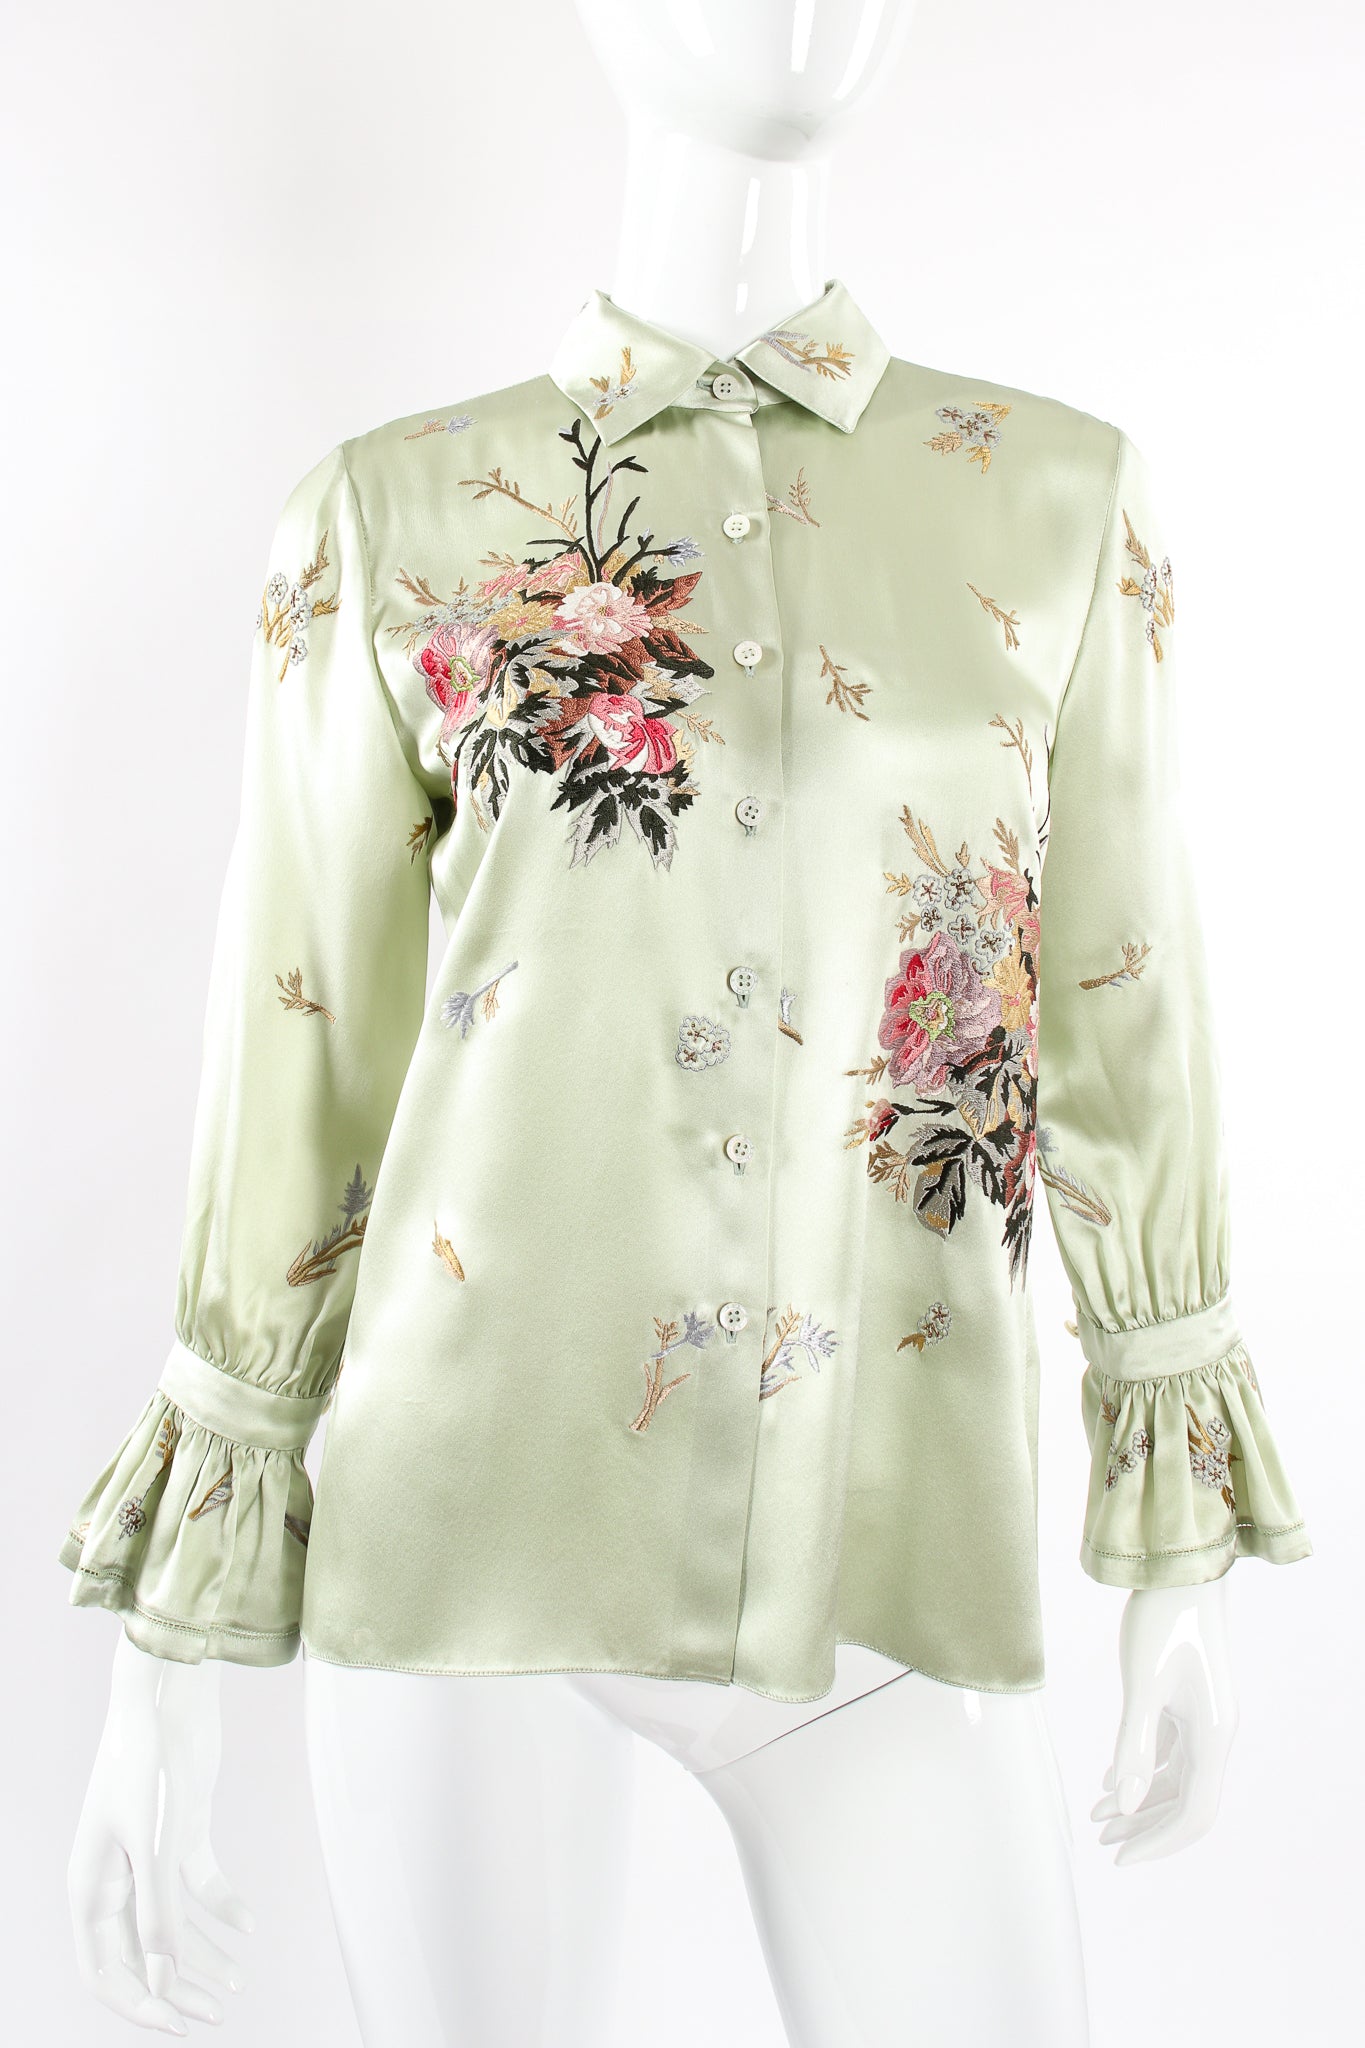 Vintage Oscar de la Renta Mint Floral Embroidered Silk Shirt on Mannequin front crop at Recess LA